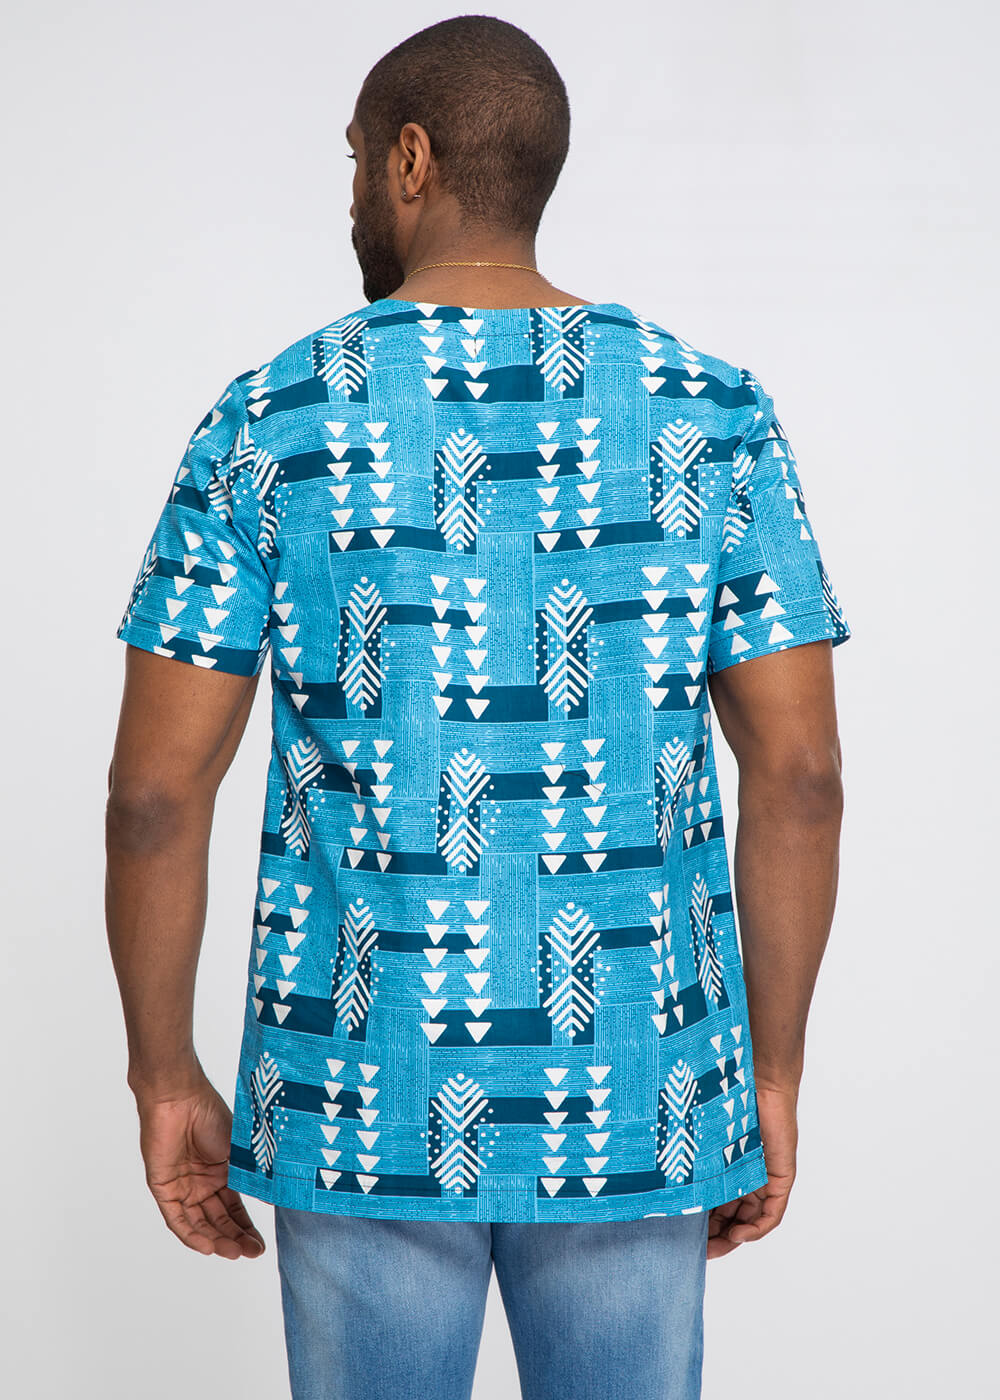 Alamini Men's African Print Men's Tunic (Navy White Mudcloth)